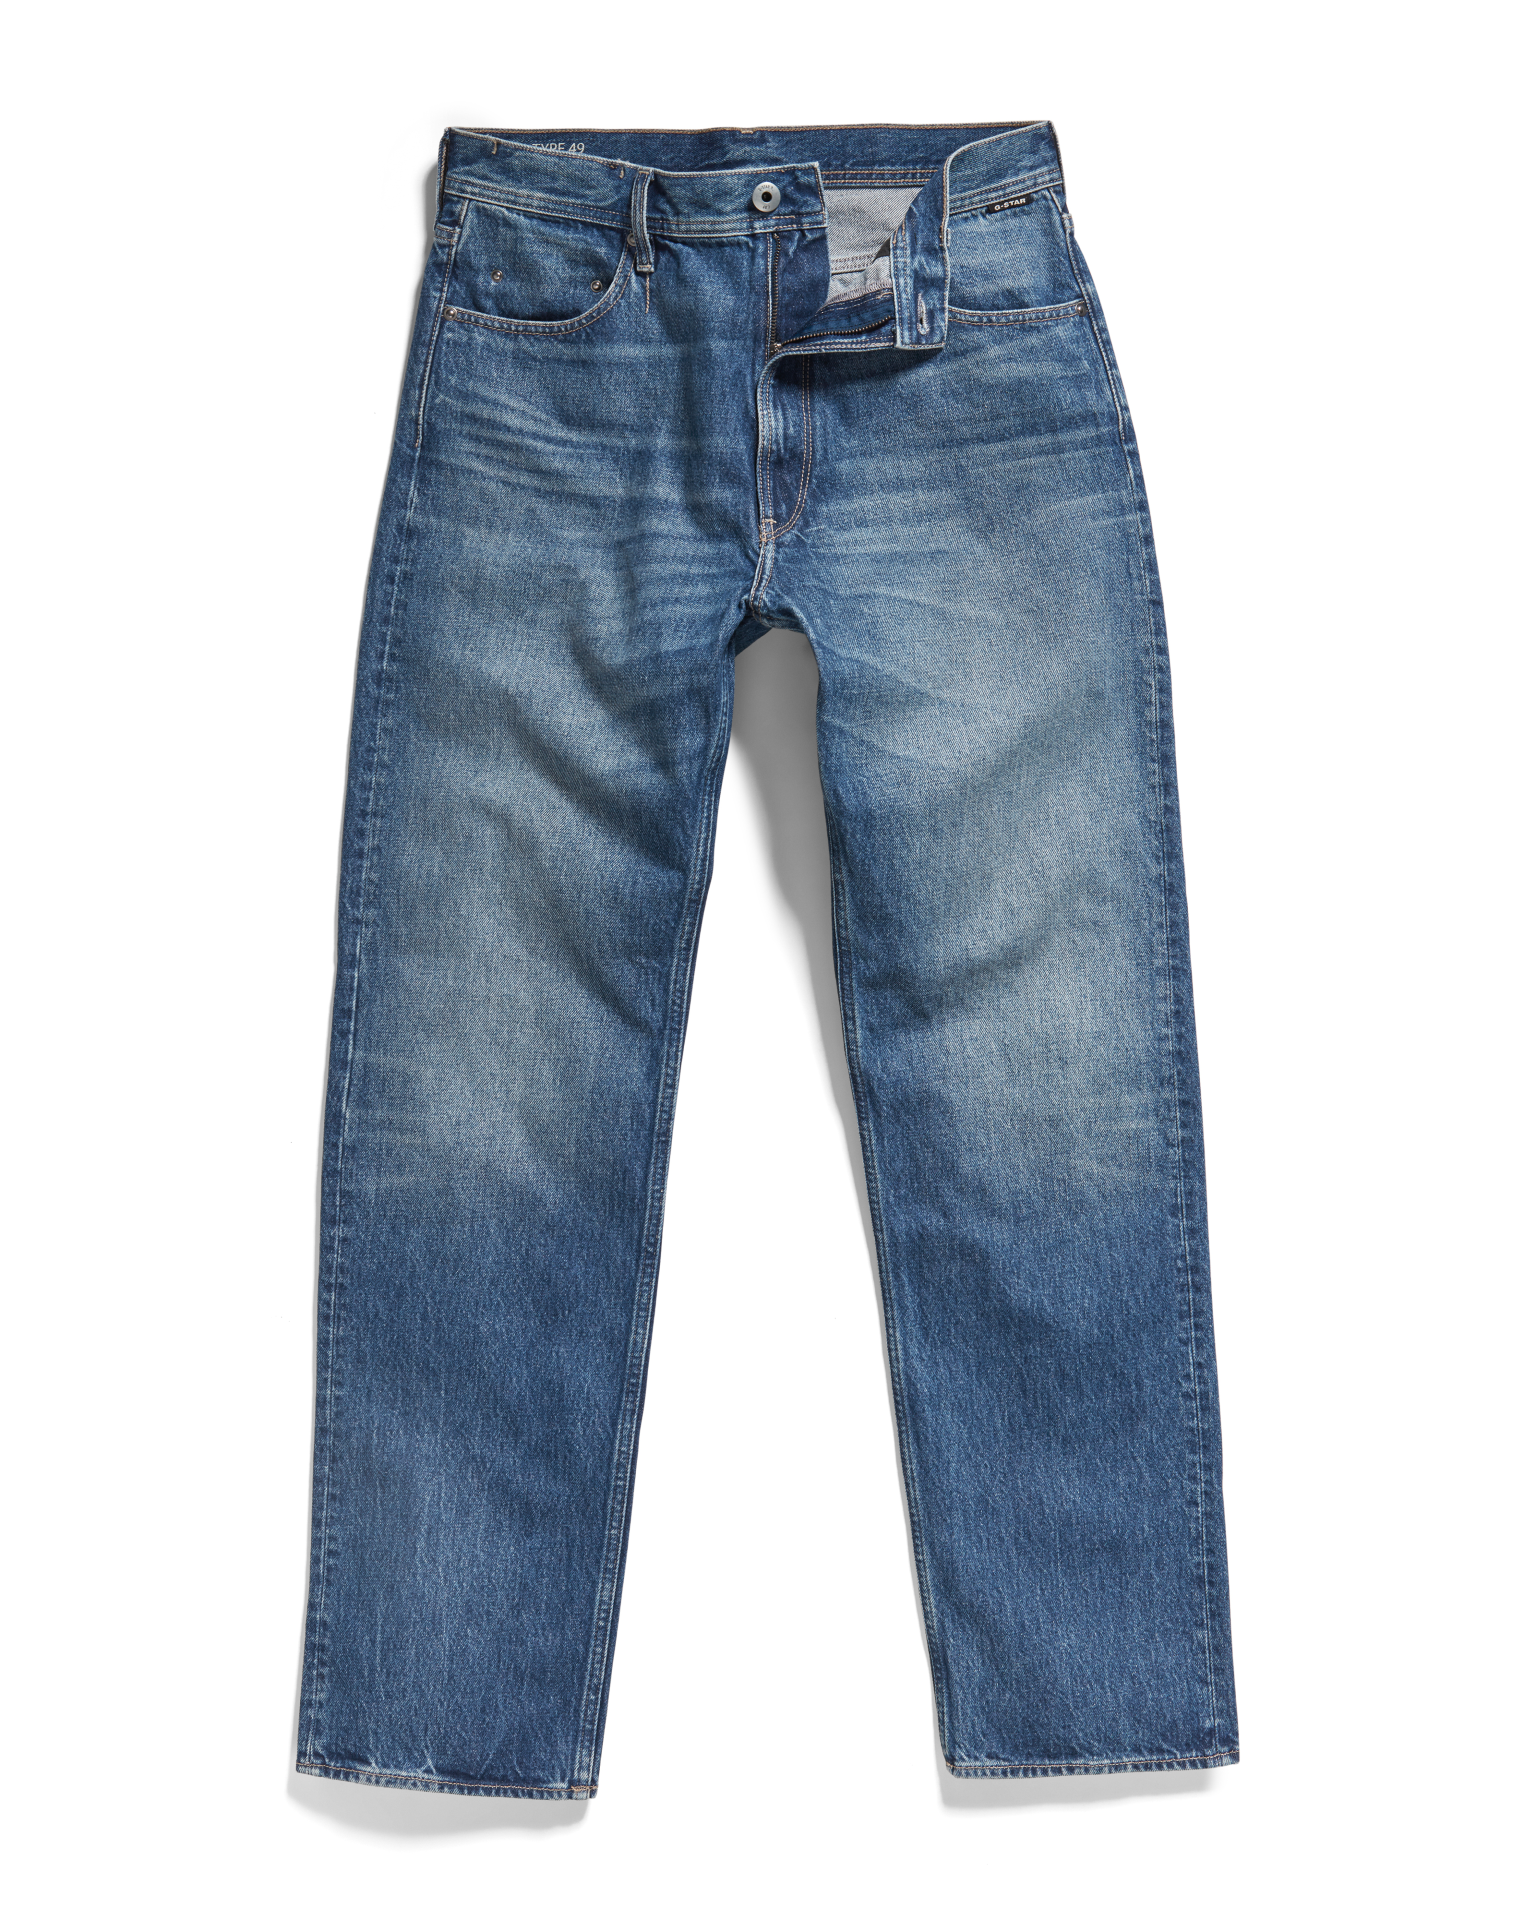 Jeans type 49 G-star hardcore denim